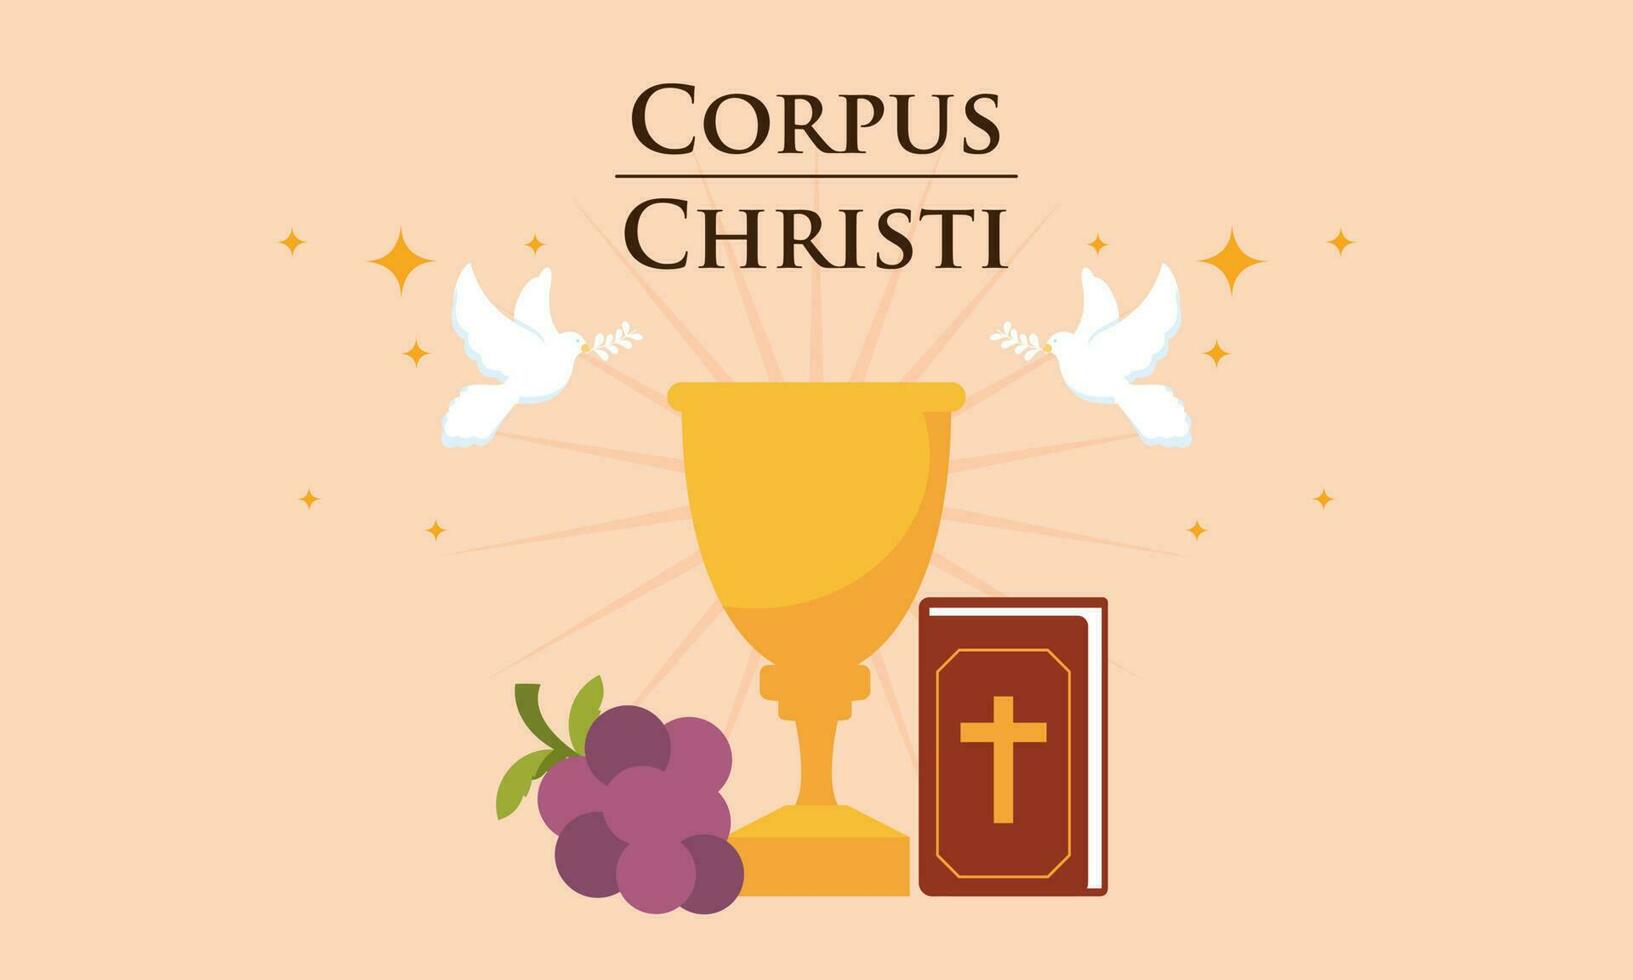 Corpus christi catholic religious holiday vector